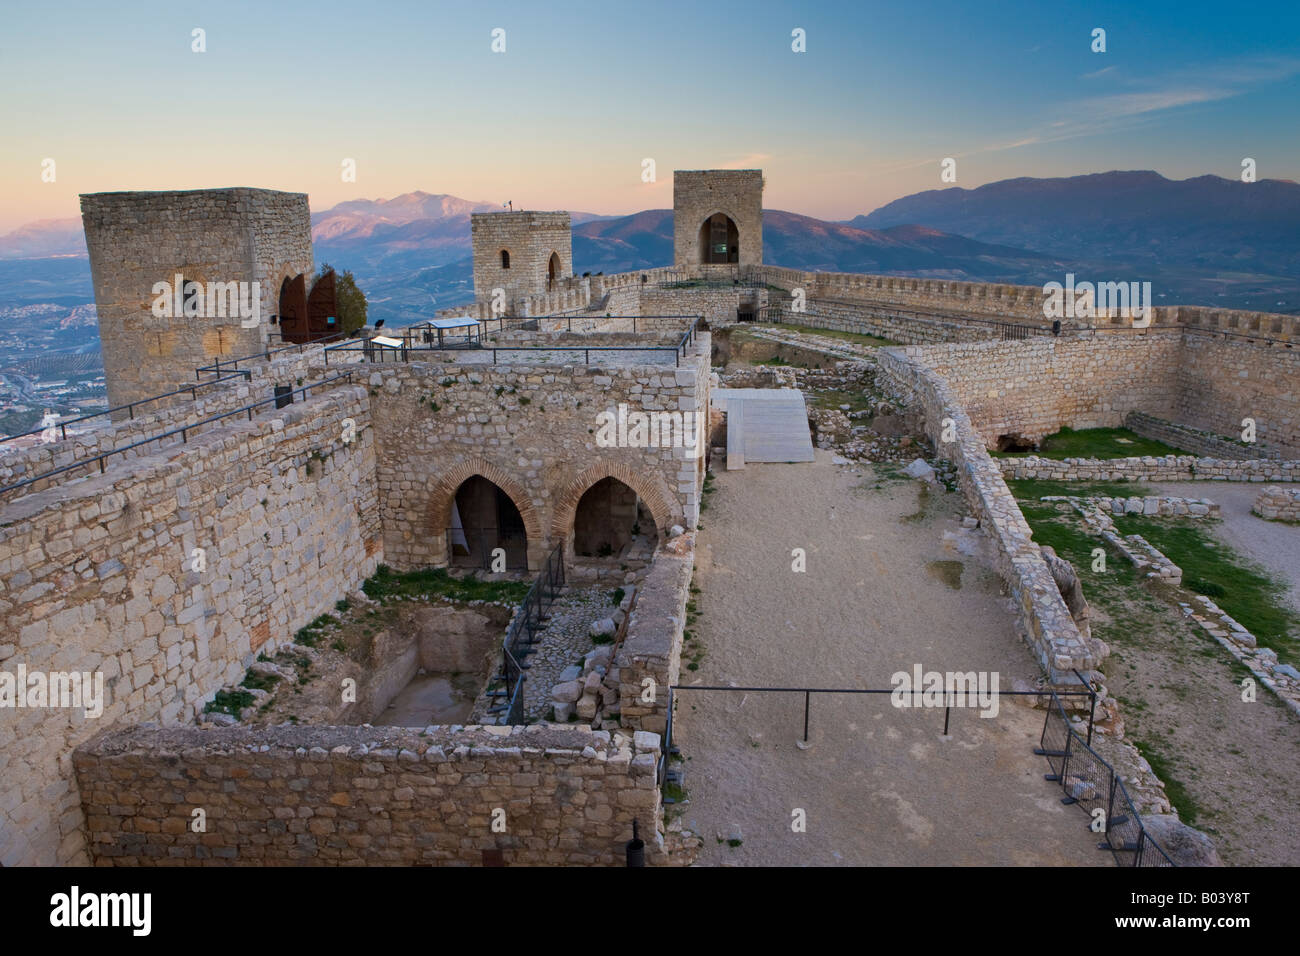 Ruins of the Castillo de Santa Catalina (Castle), City of Jaen, Province of Jaen, Andalusia (Andalucia), Spain, Europe. Stock Photo